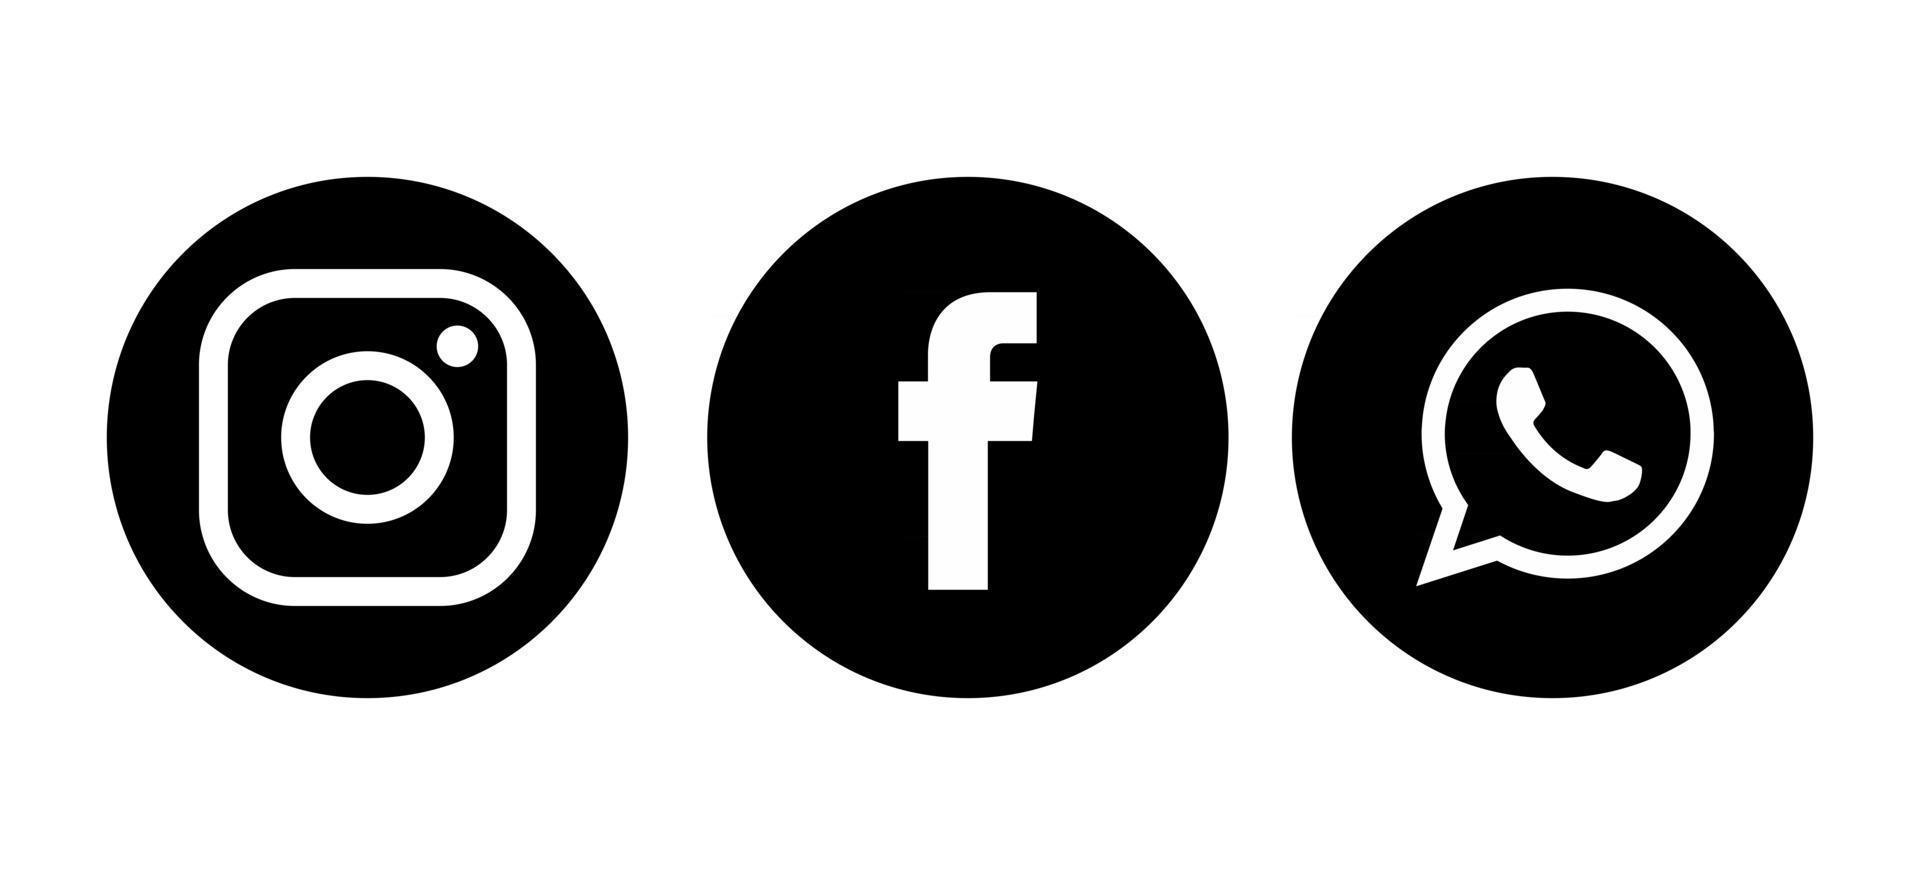 Facebook WhatsApp Instagram app icons and logos vector